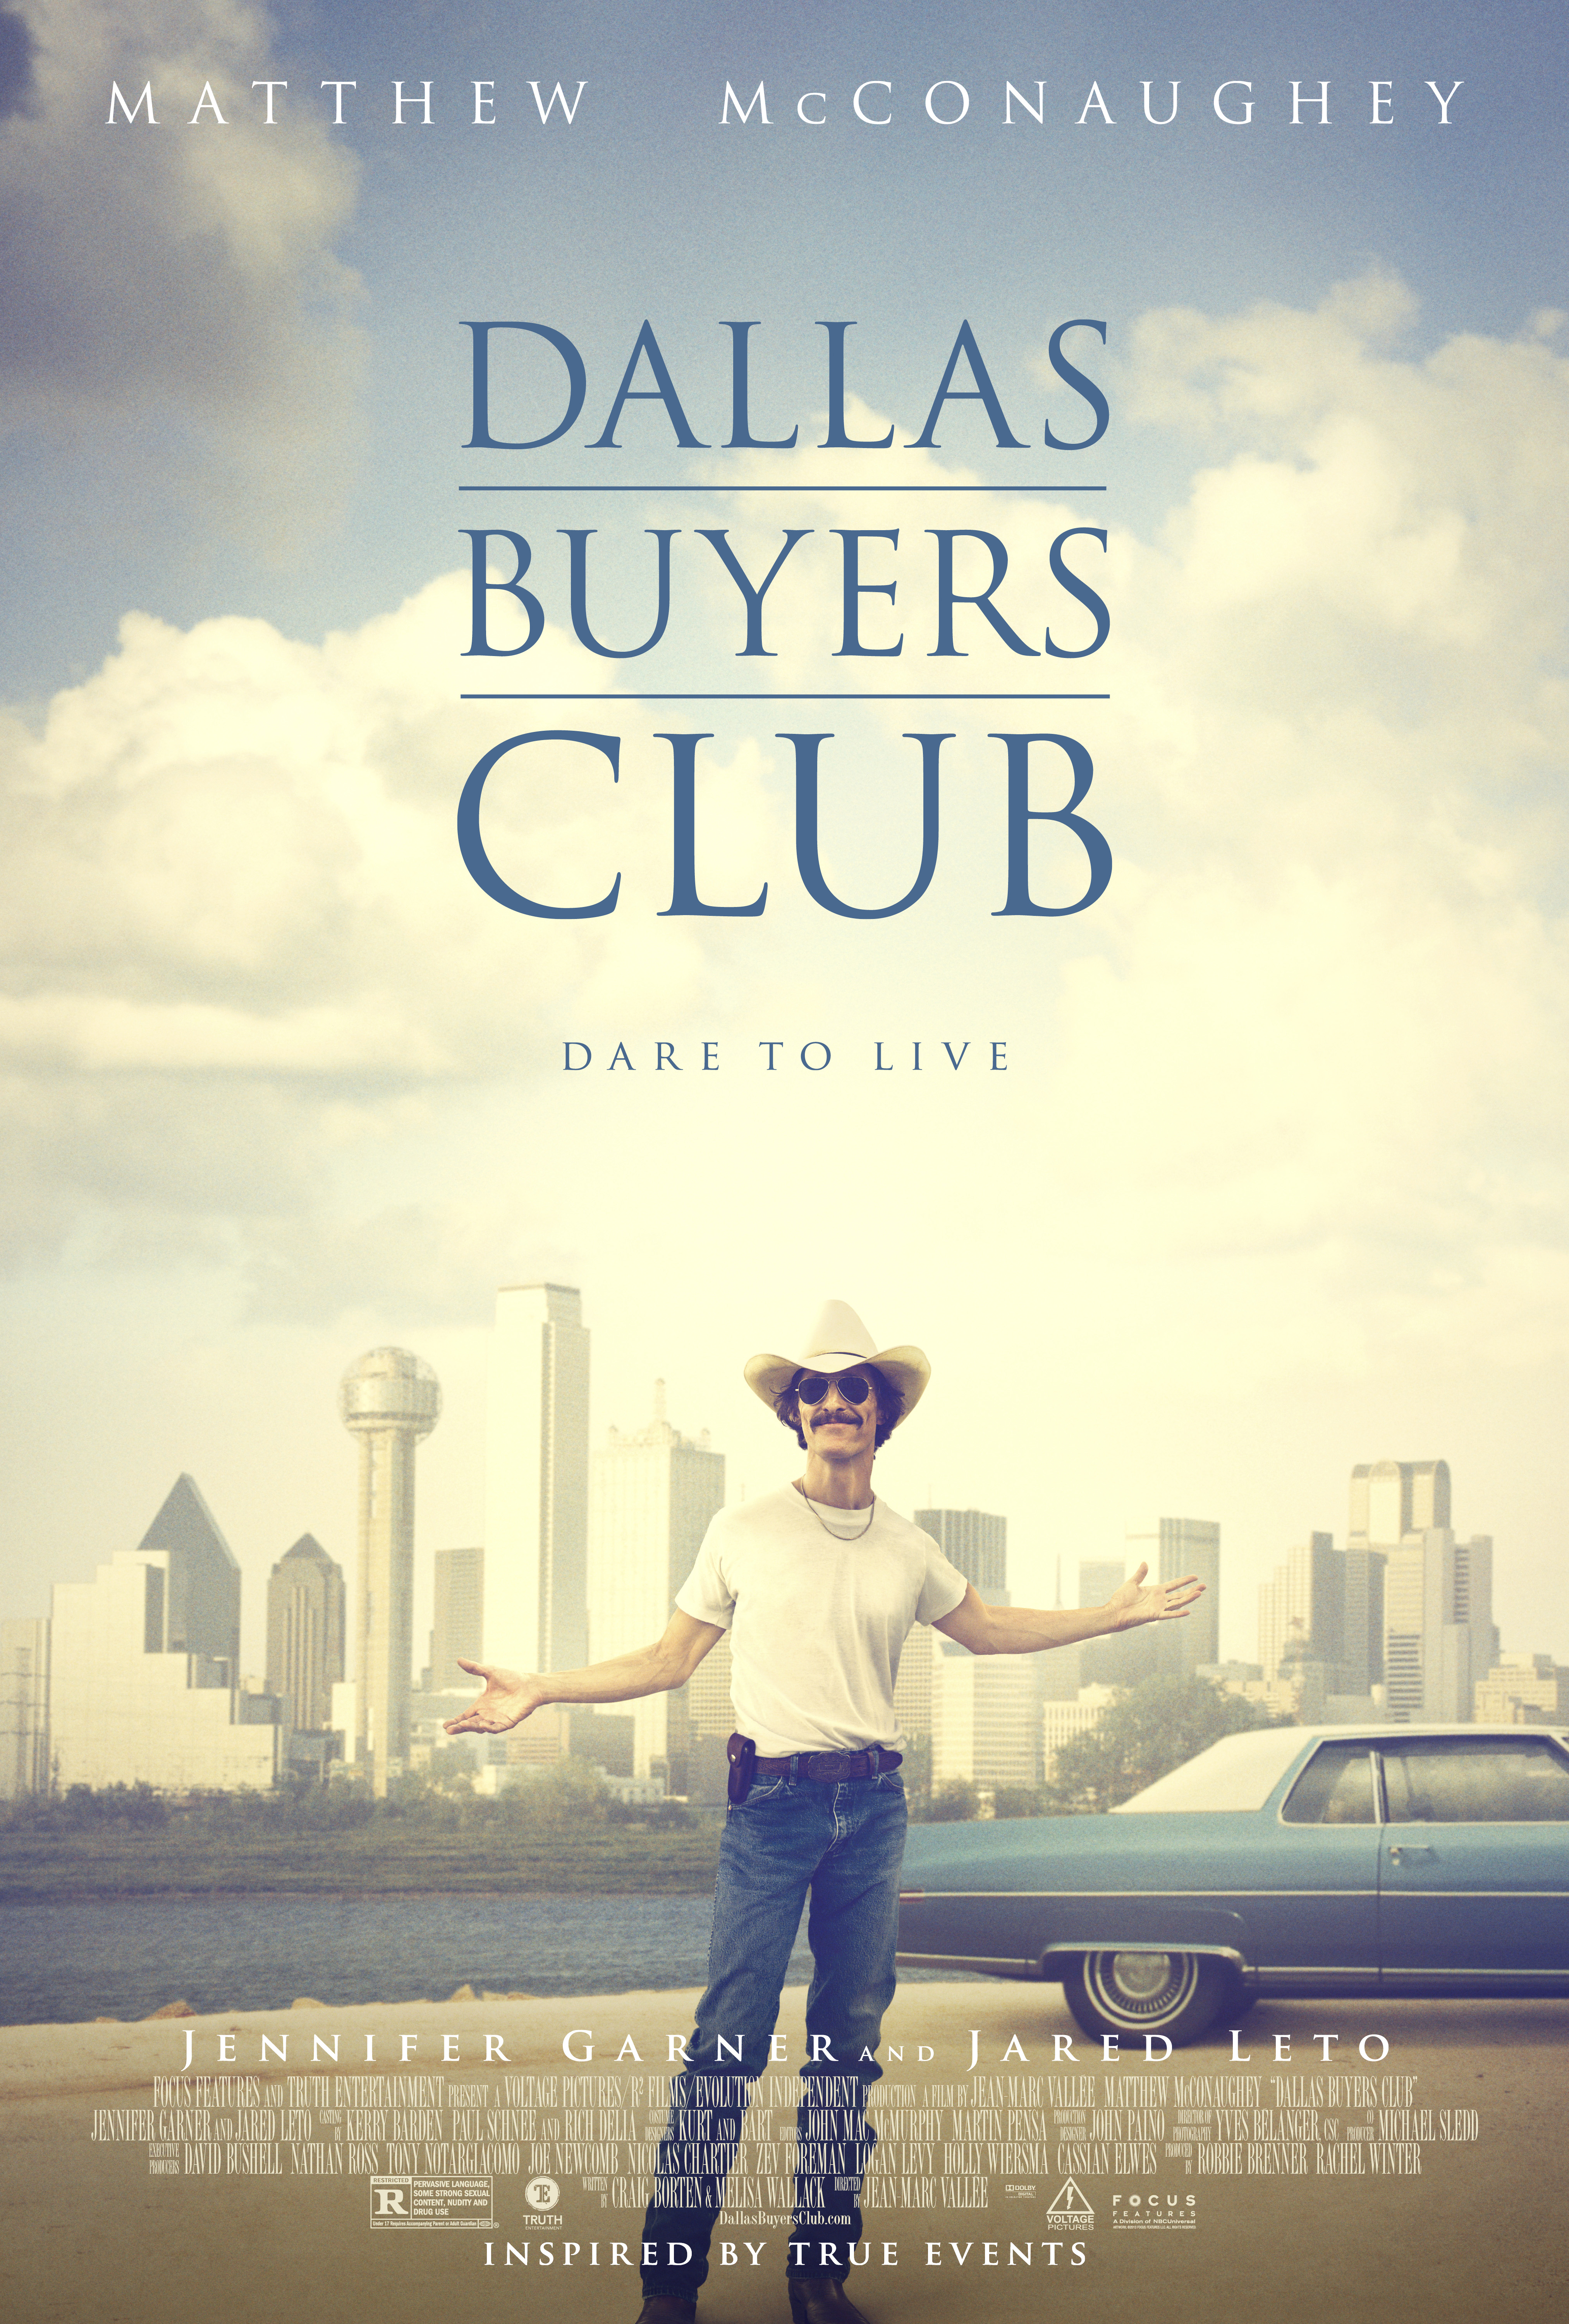 The Movie Dallas Buyers Club